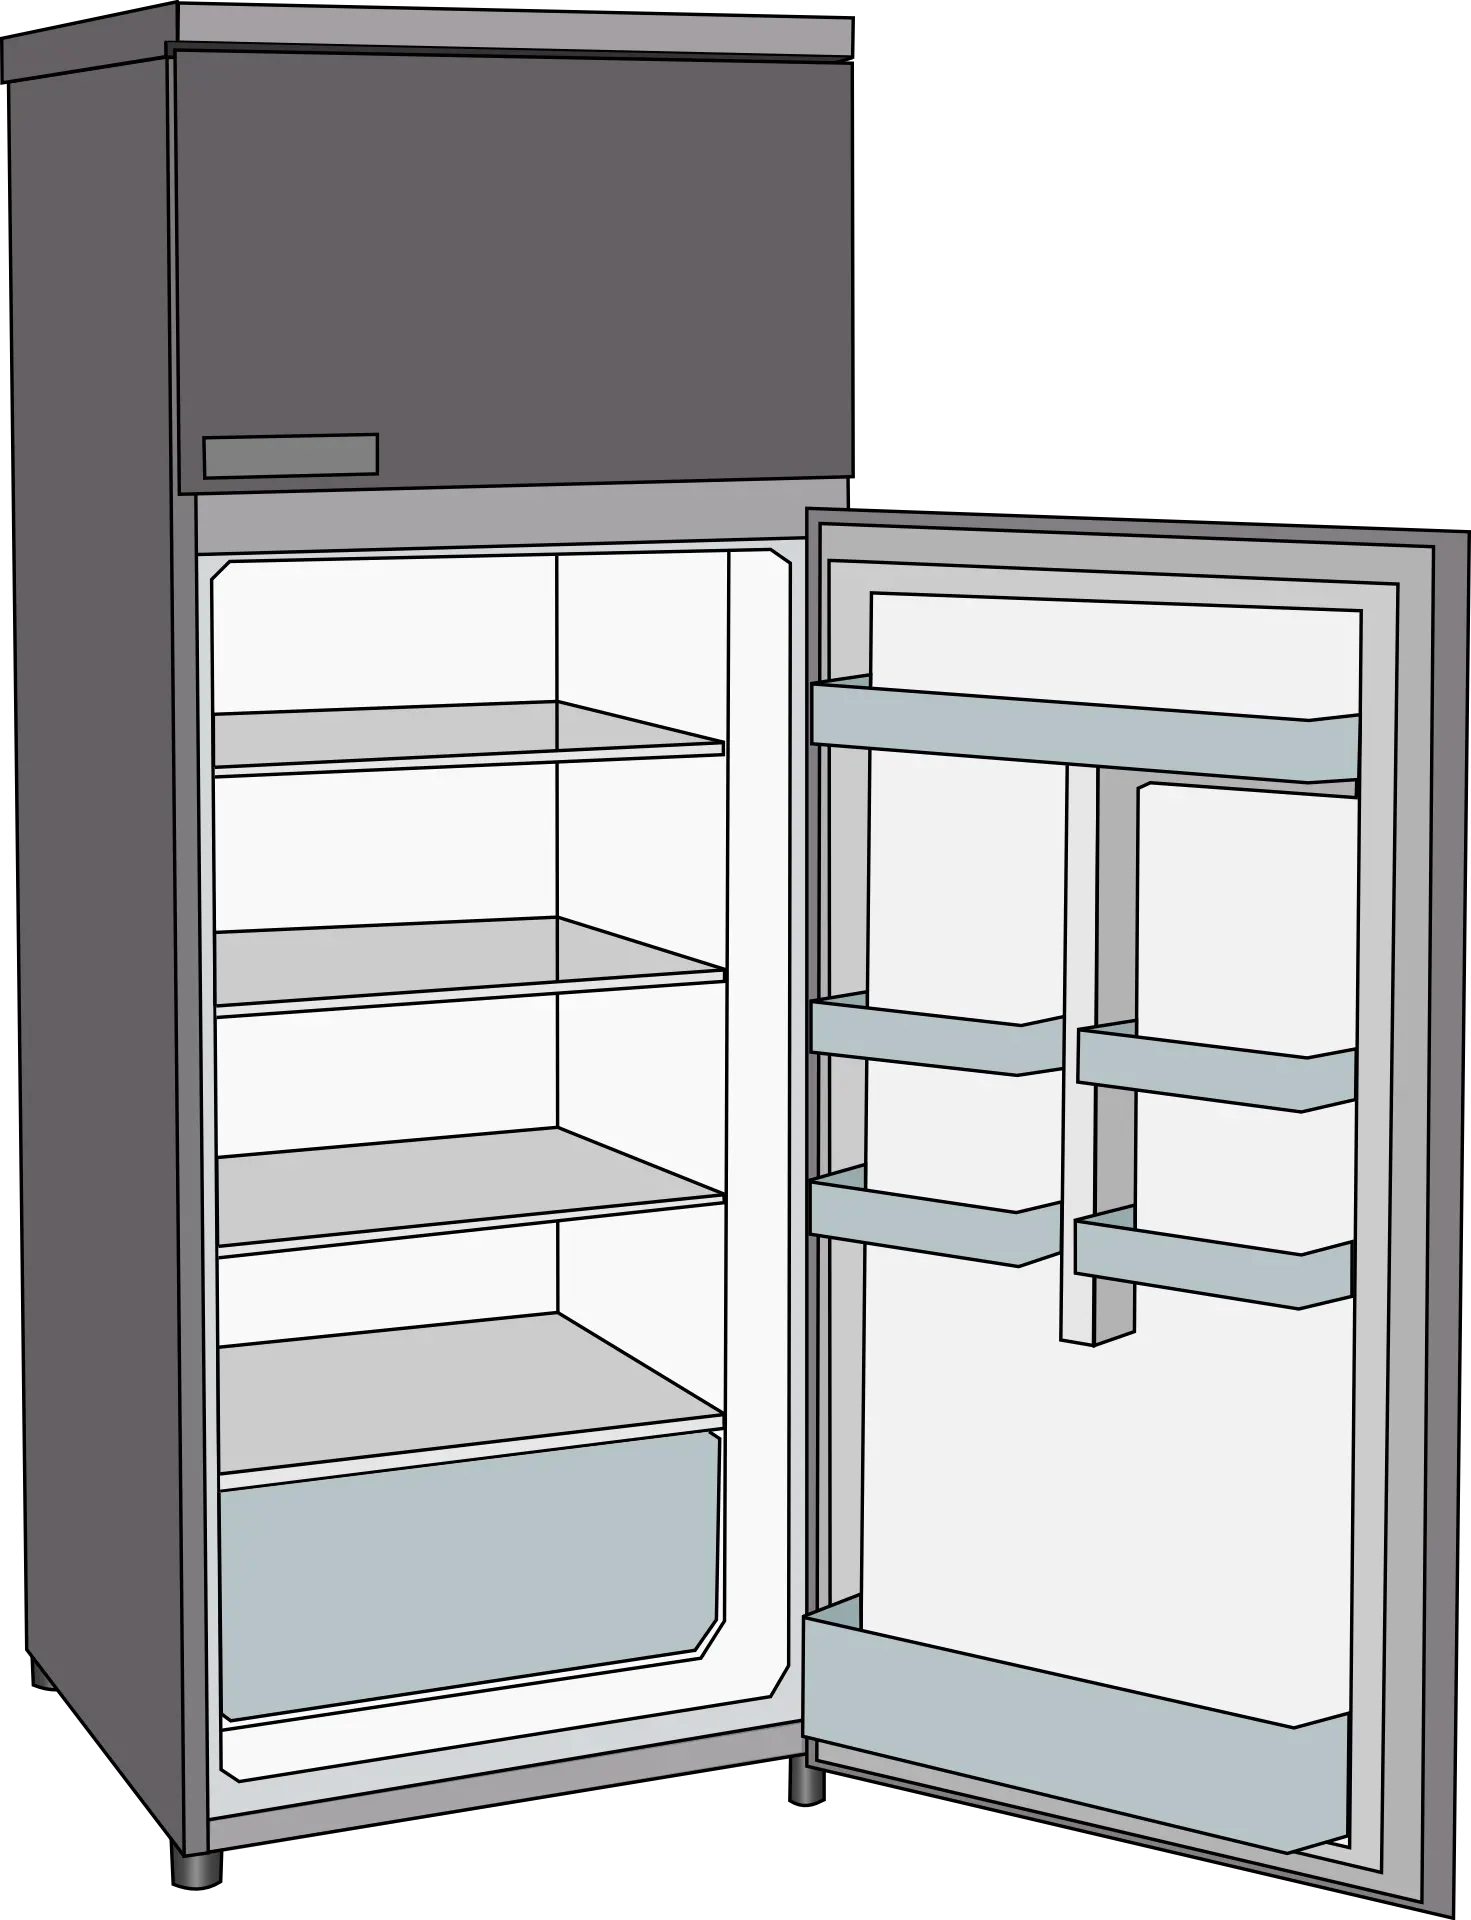 Open Refrigerator Png Clip Arts For Web Clip Arts Free Png Empty Fridge Png Refrigerator Png